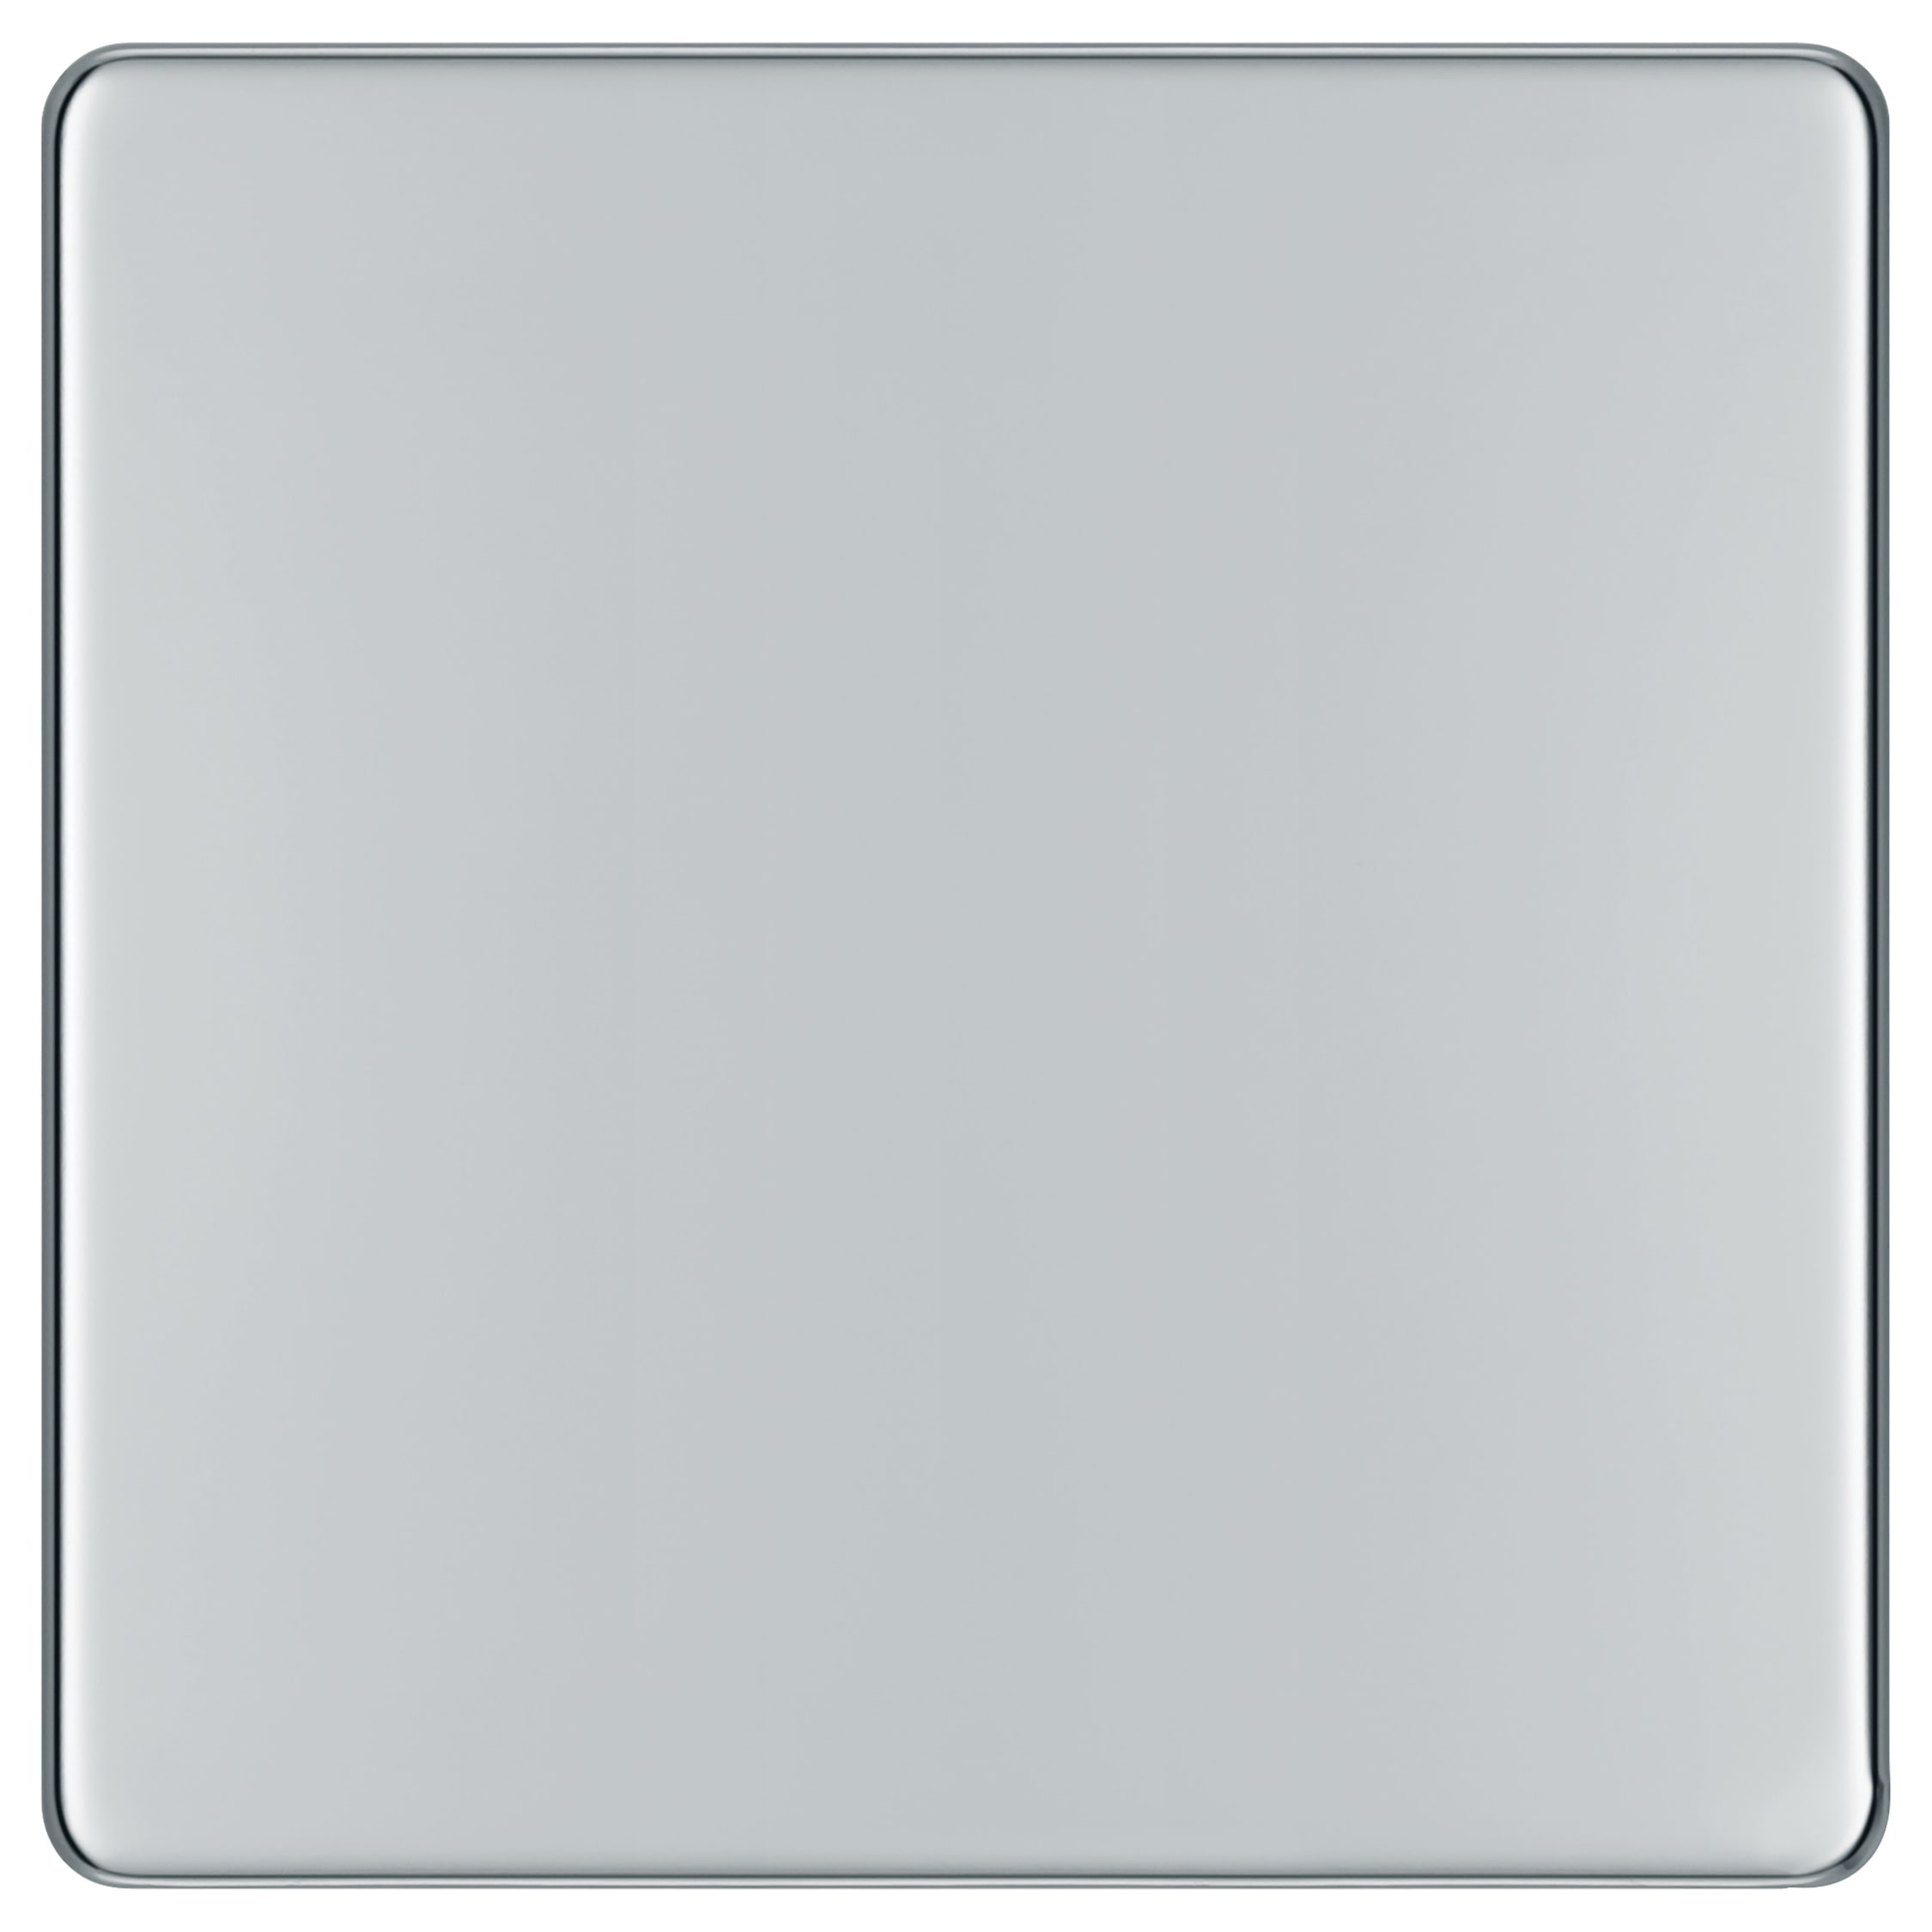 BG Screwless Flat Plate Polished Chrome Blank Plate 1 Gang